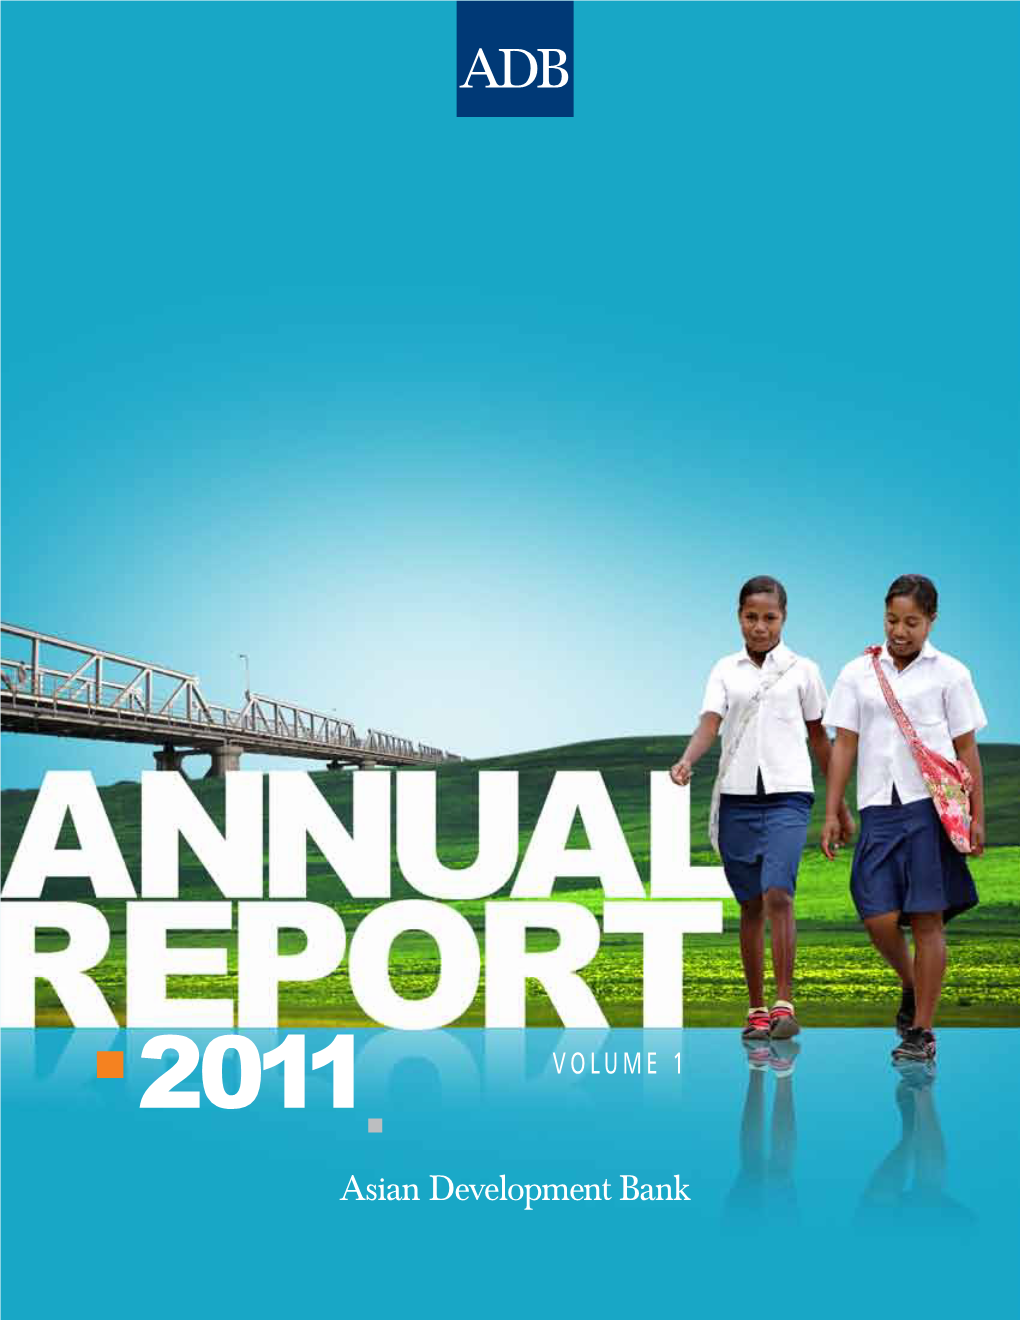 ADB Annual Report 2011, Volume 1